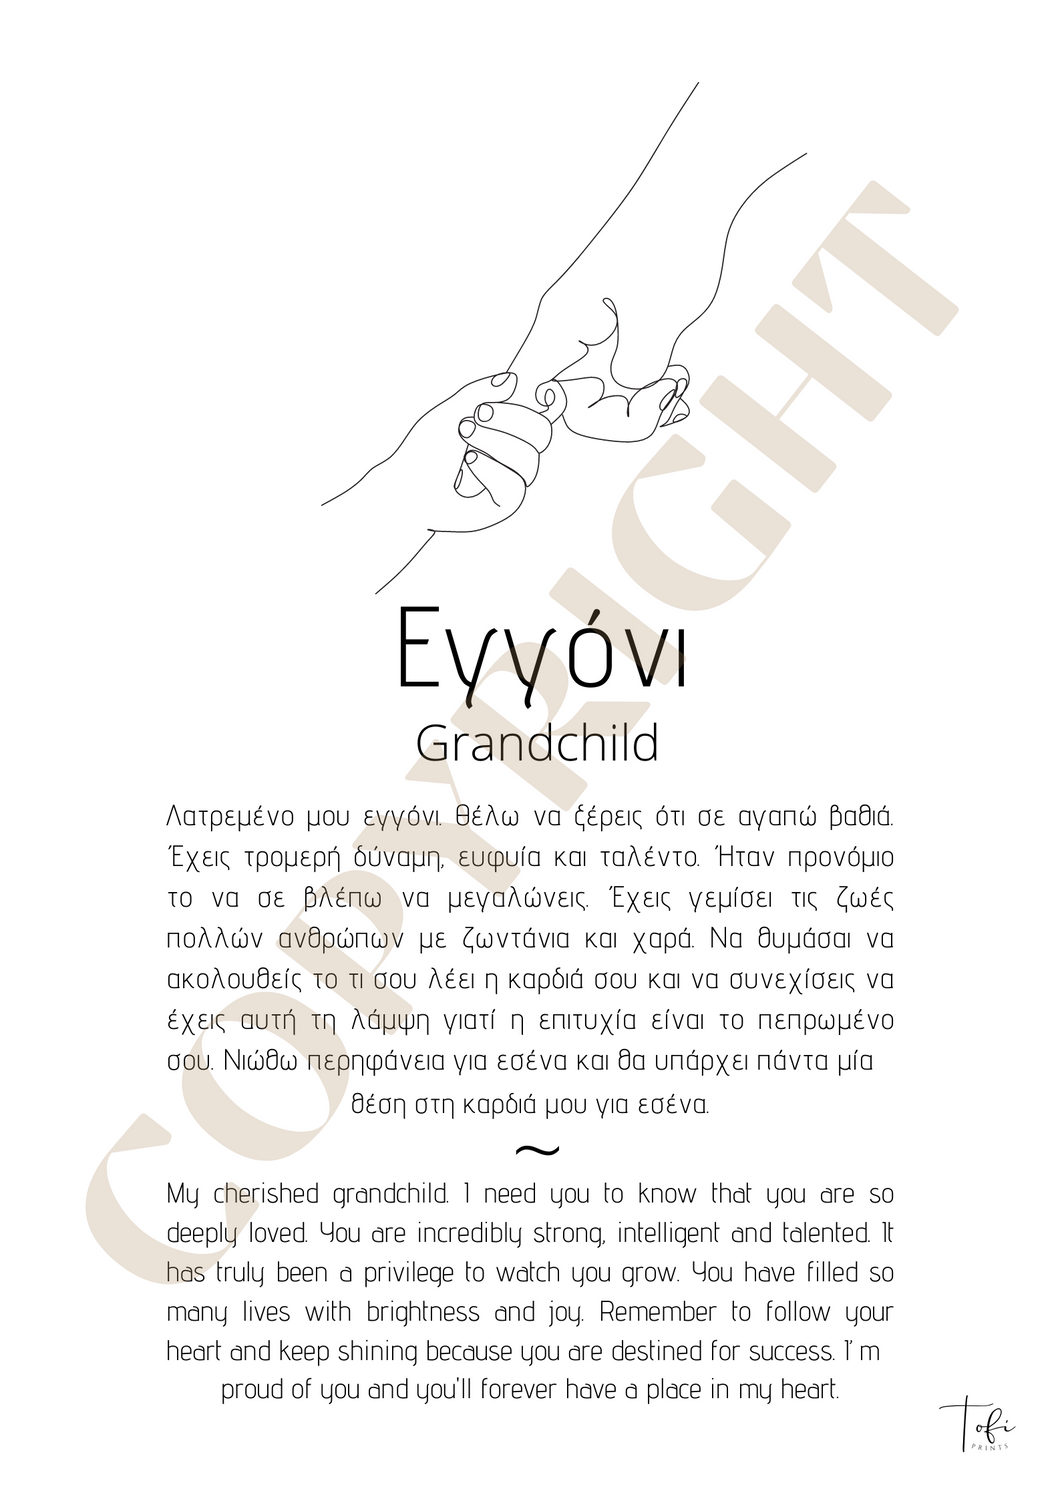 Eγγόνι - Grandchild